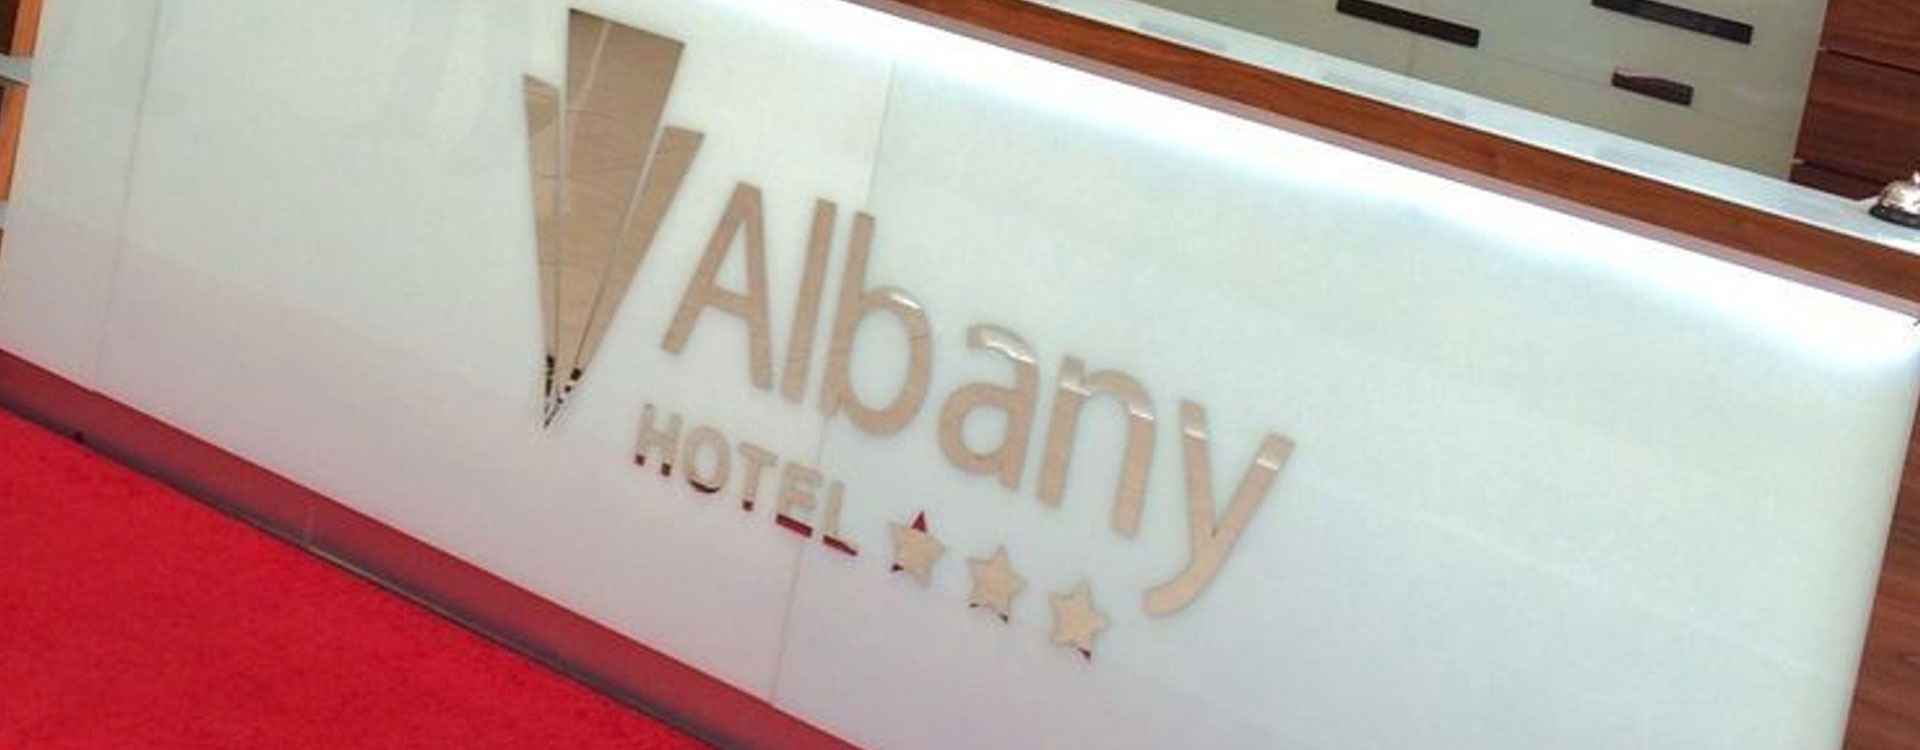 The Albany Hotel